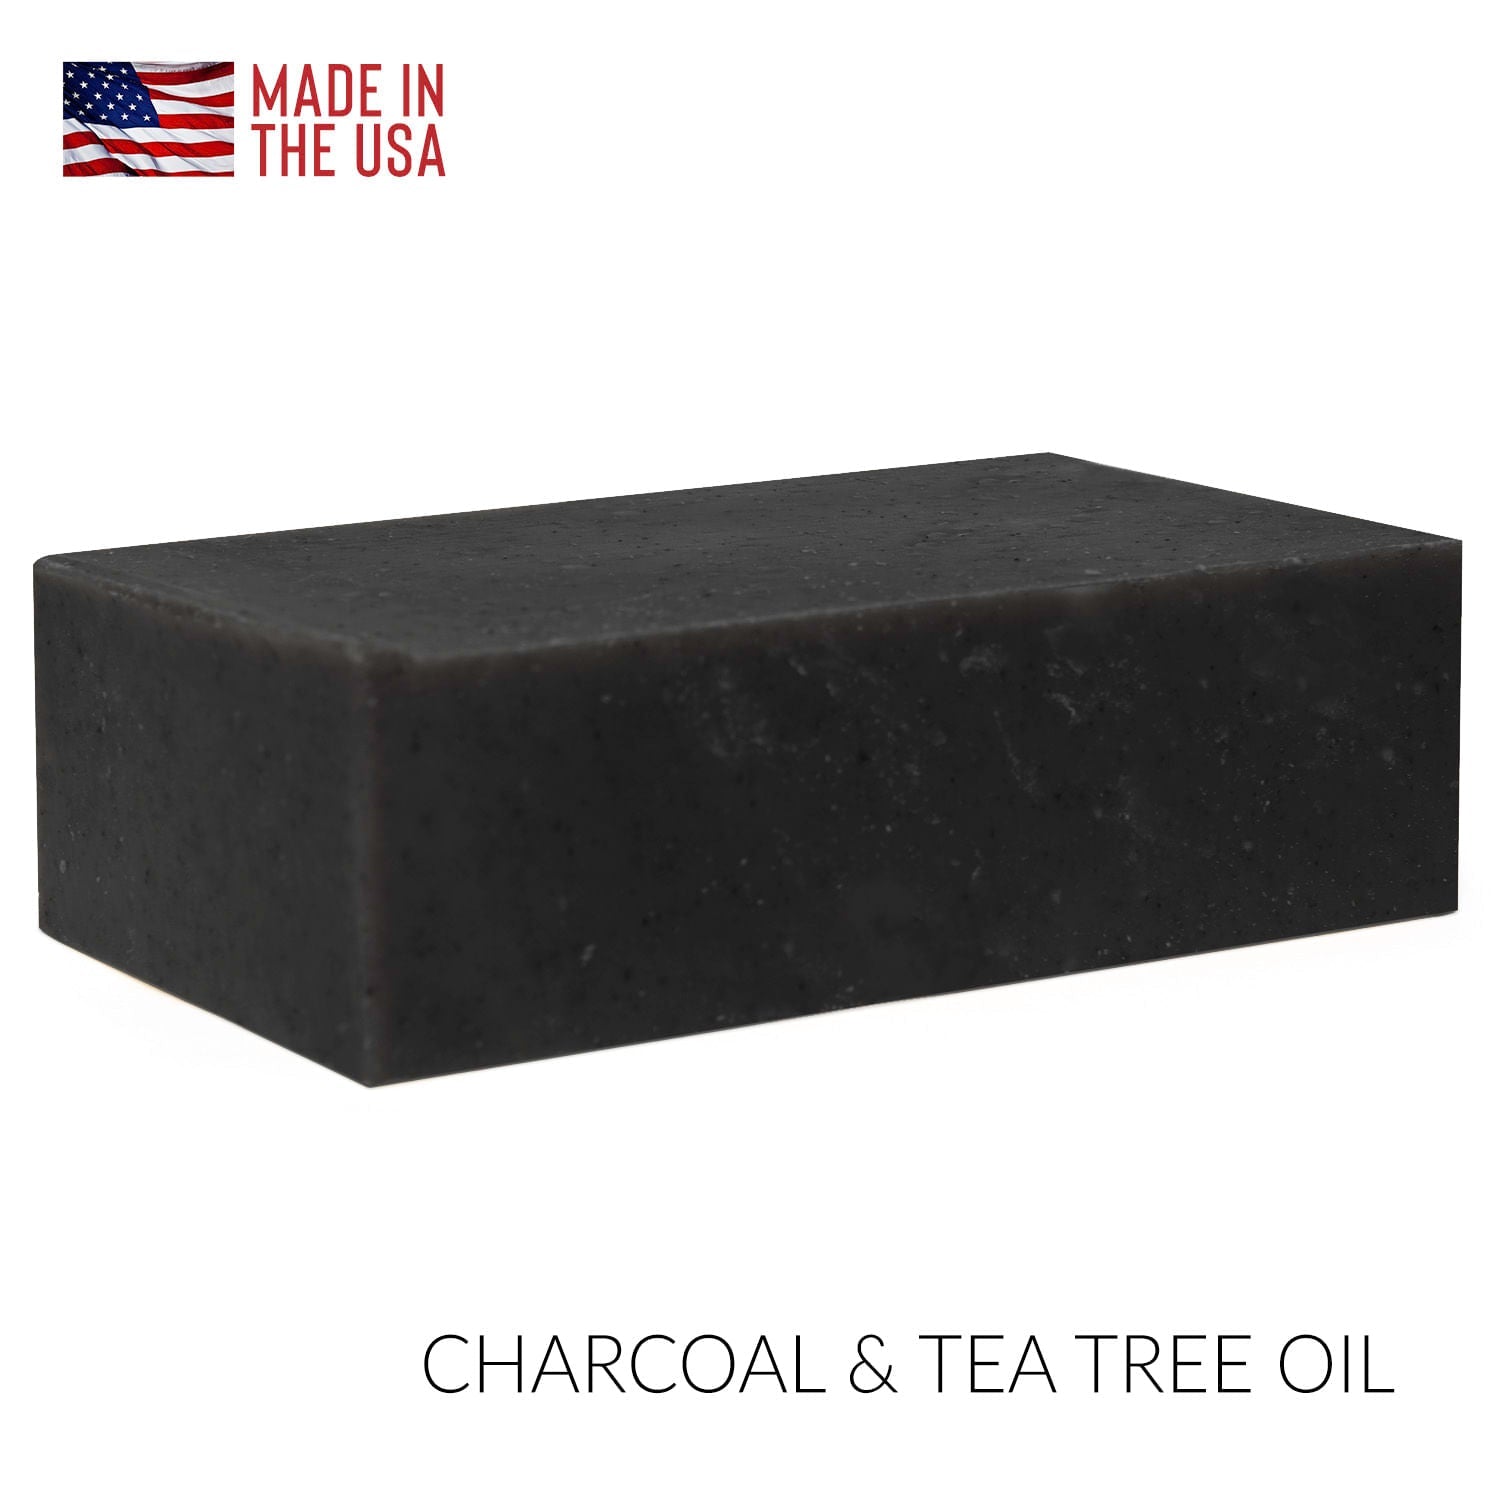 Charcoal Tea tree oil bar soap. 